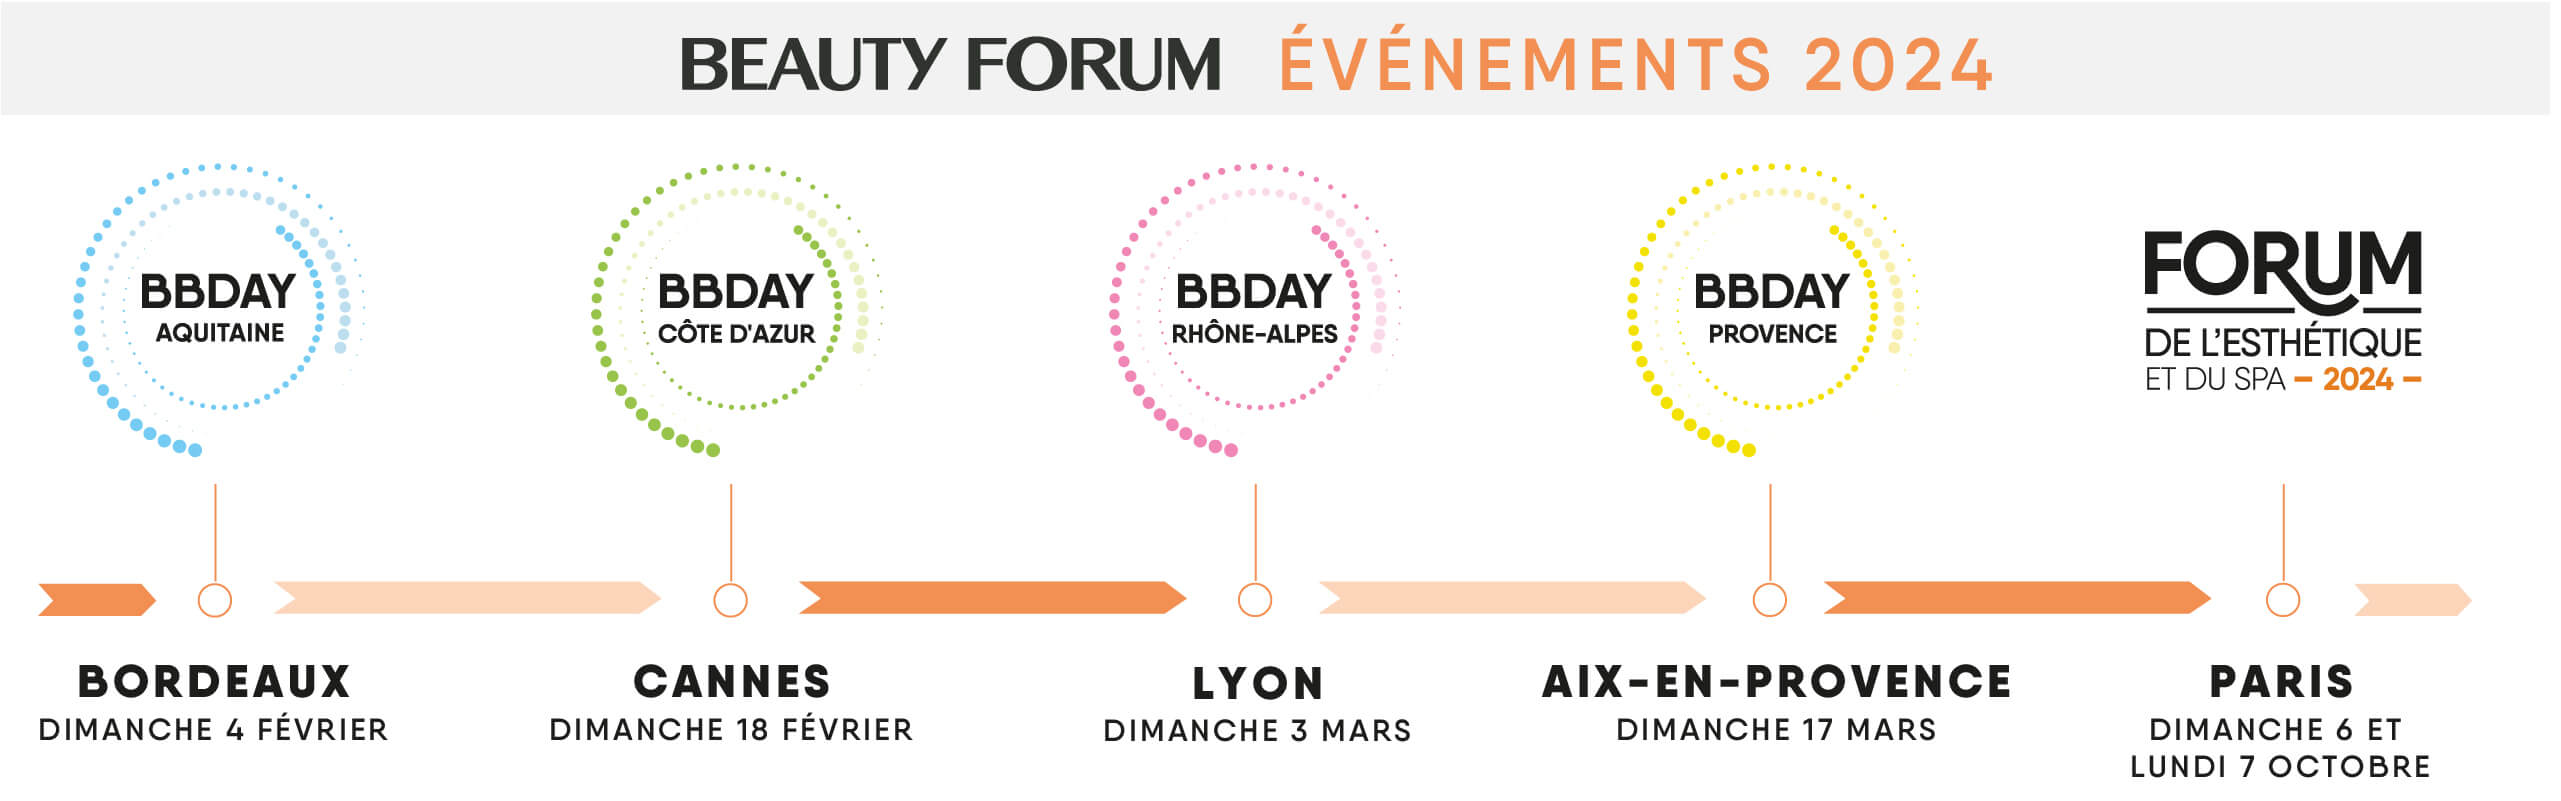 BBDAY2024-Beauty Forum